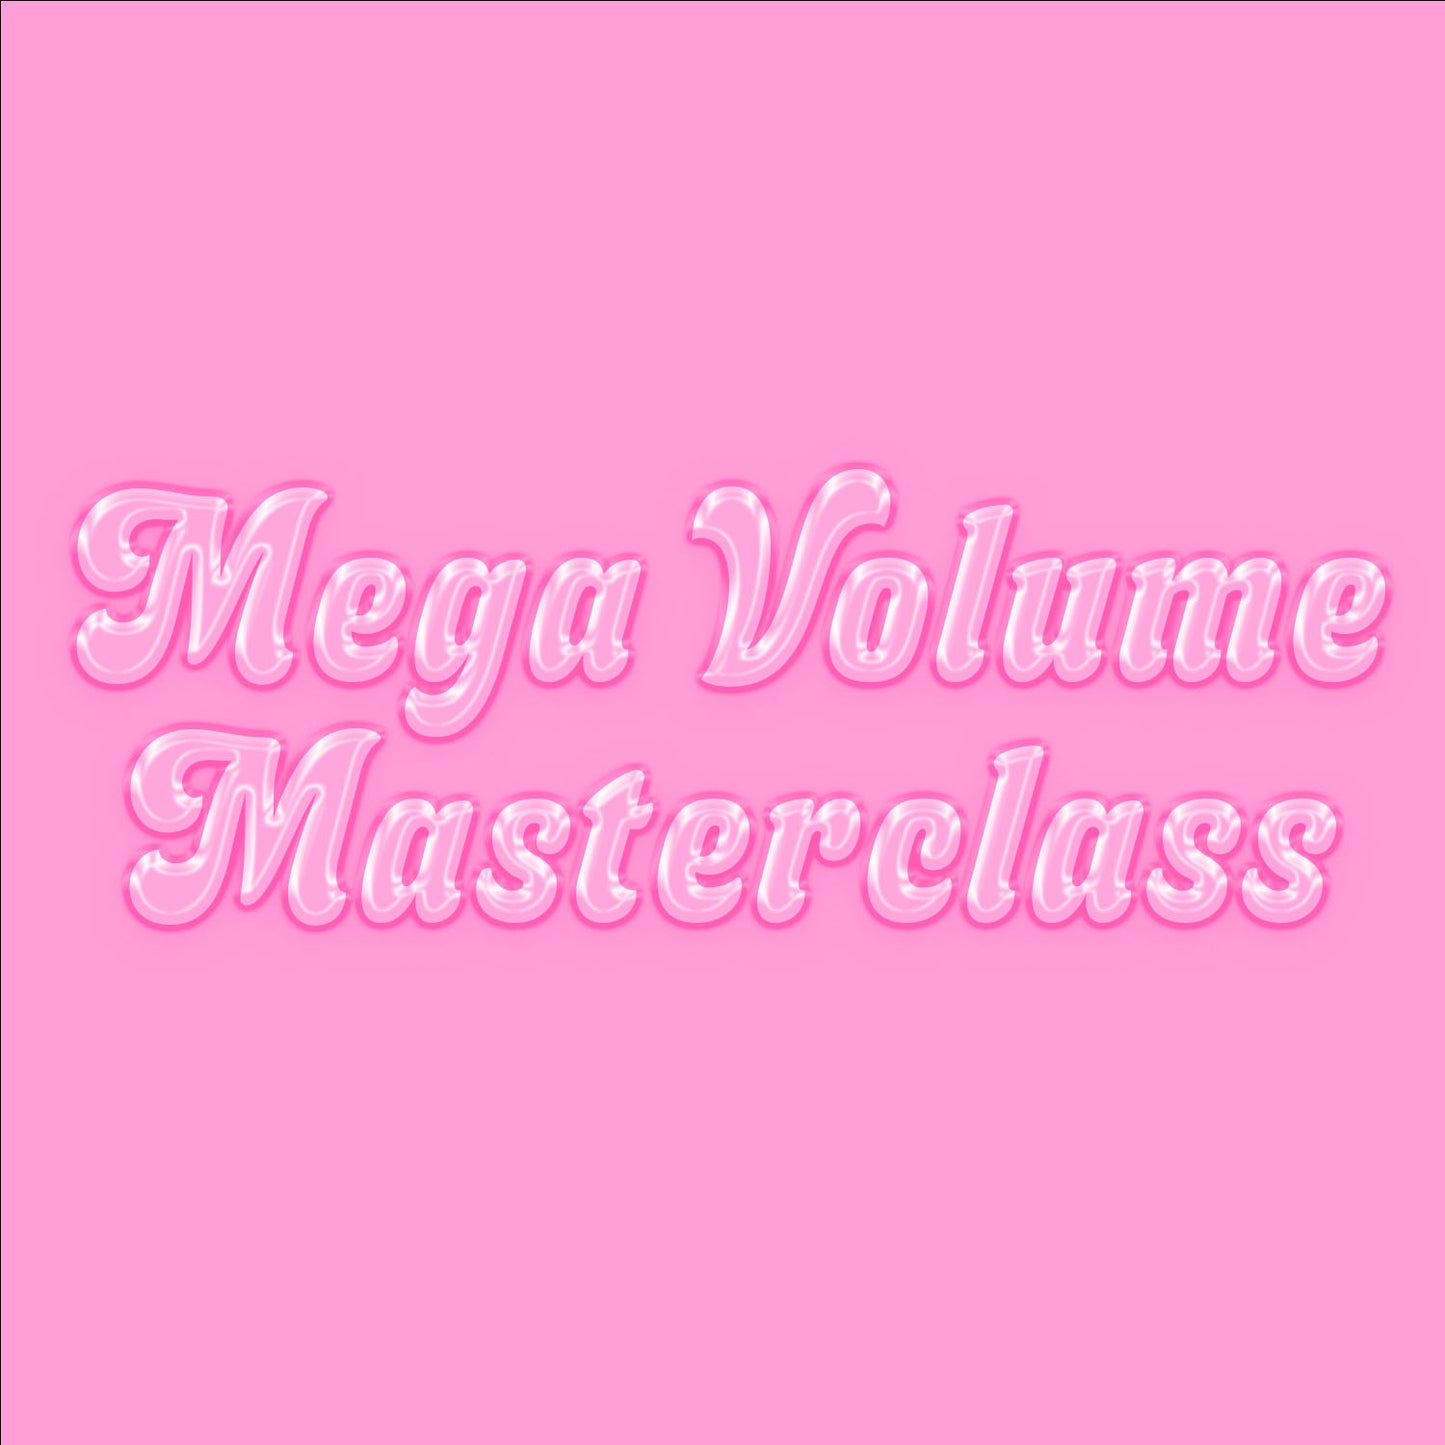 MEGA VOLUME MASTERCLASS